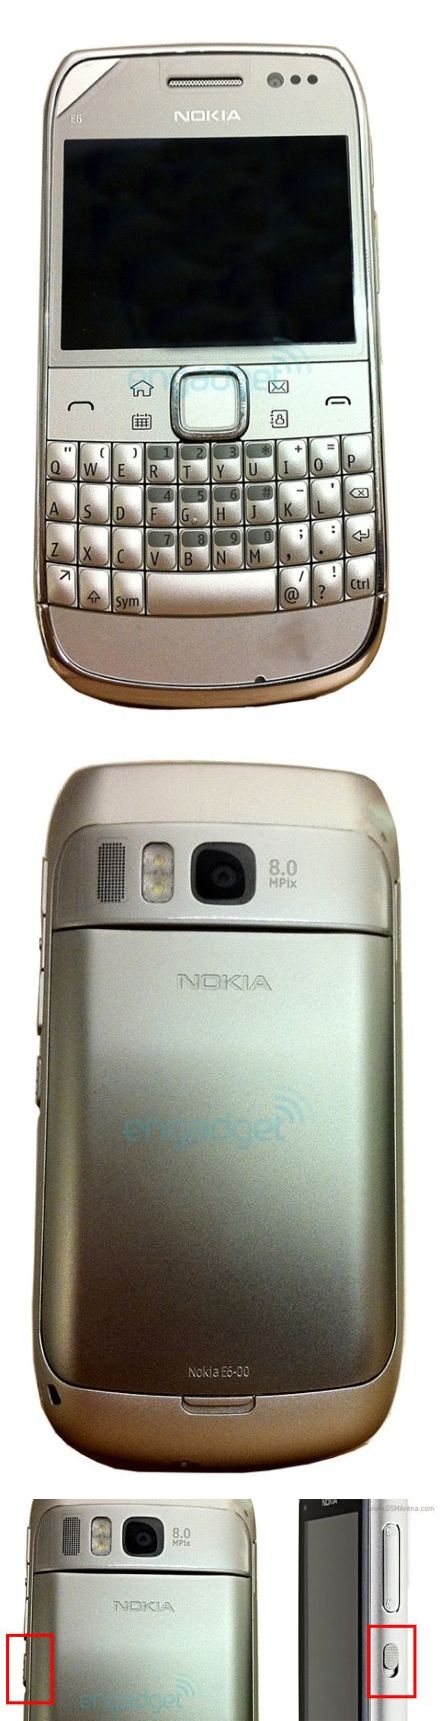 Lebukott a Nokia E6-00